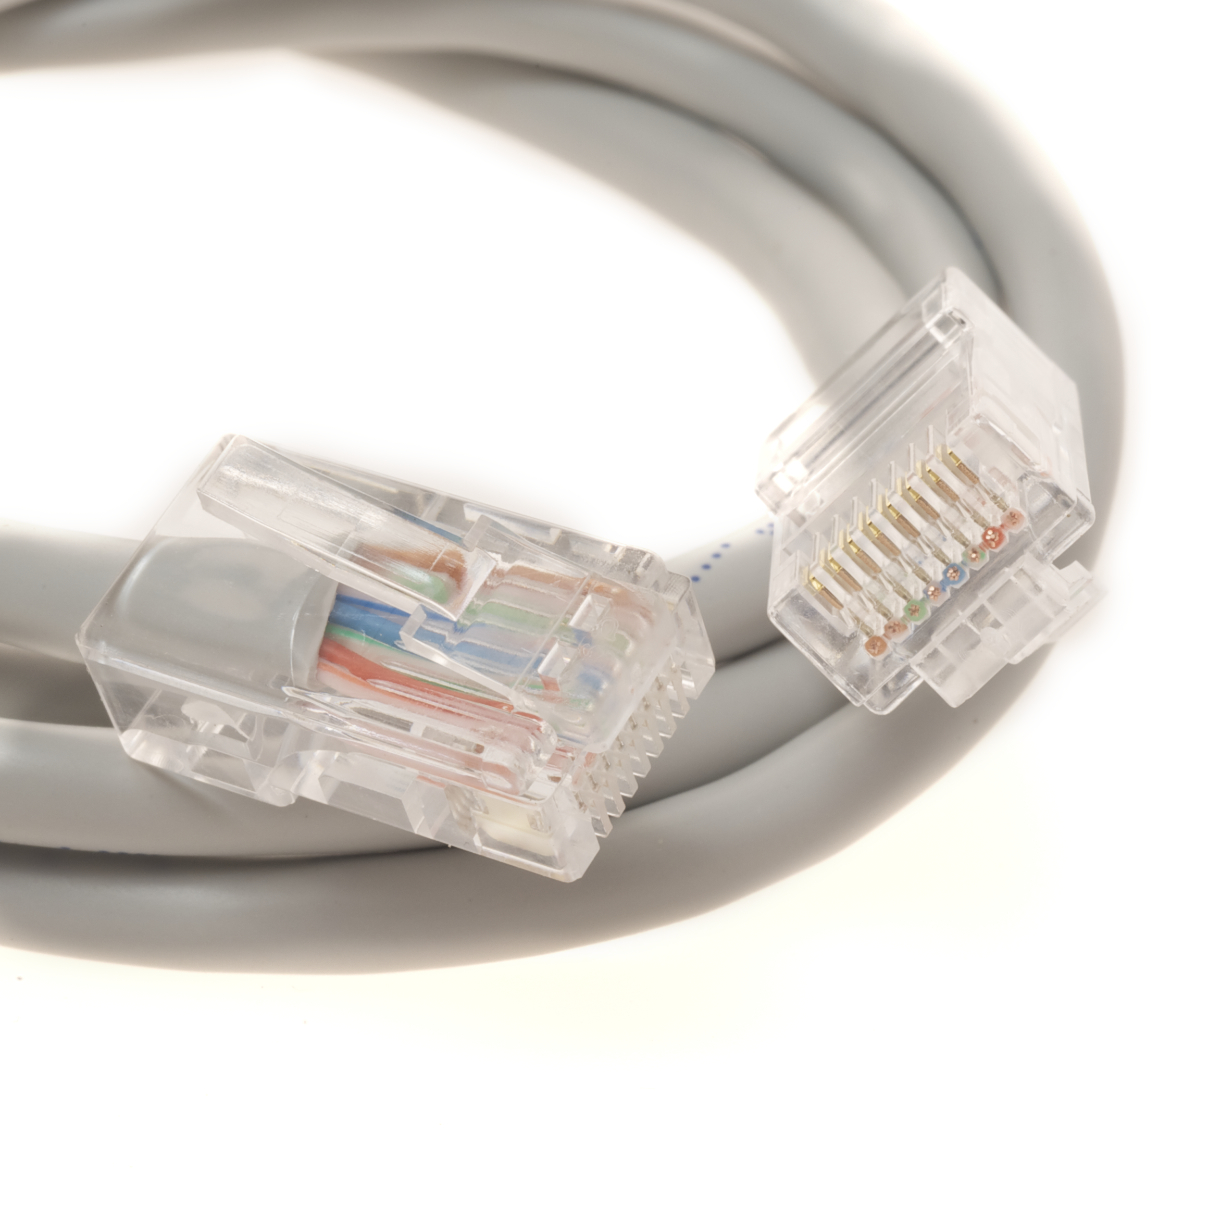 Plenum Category 5e Gray Ethernet Cables